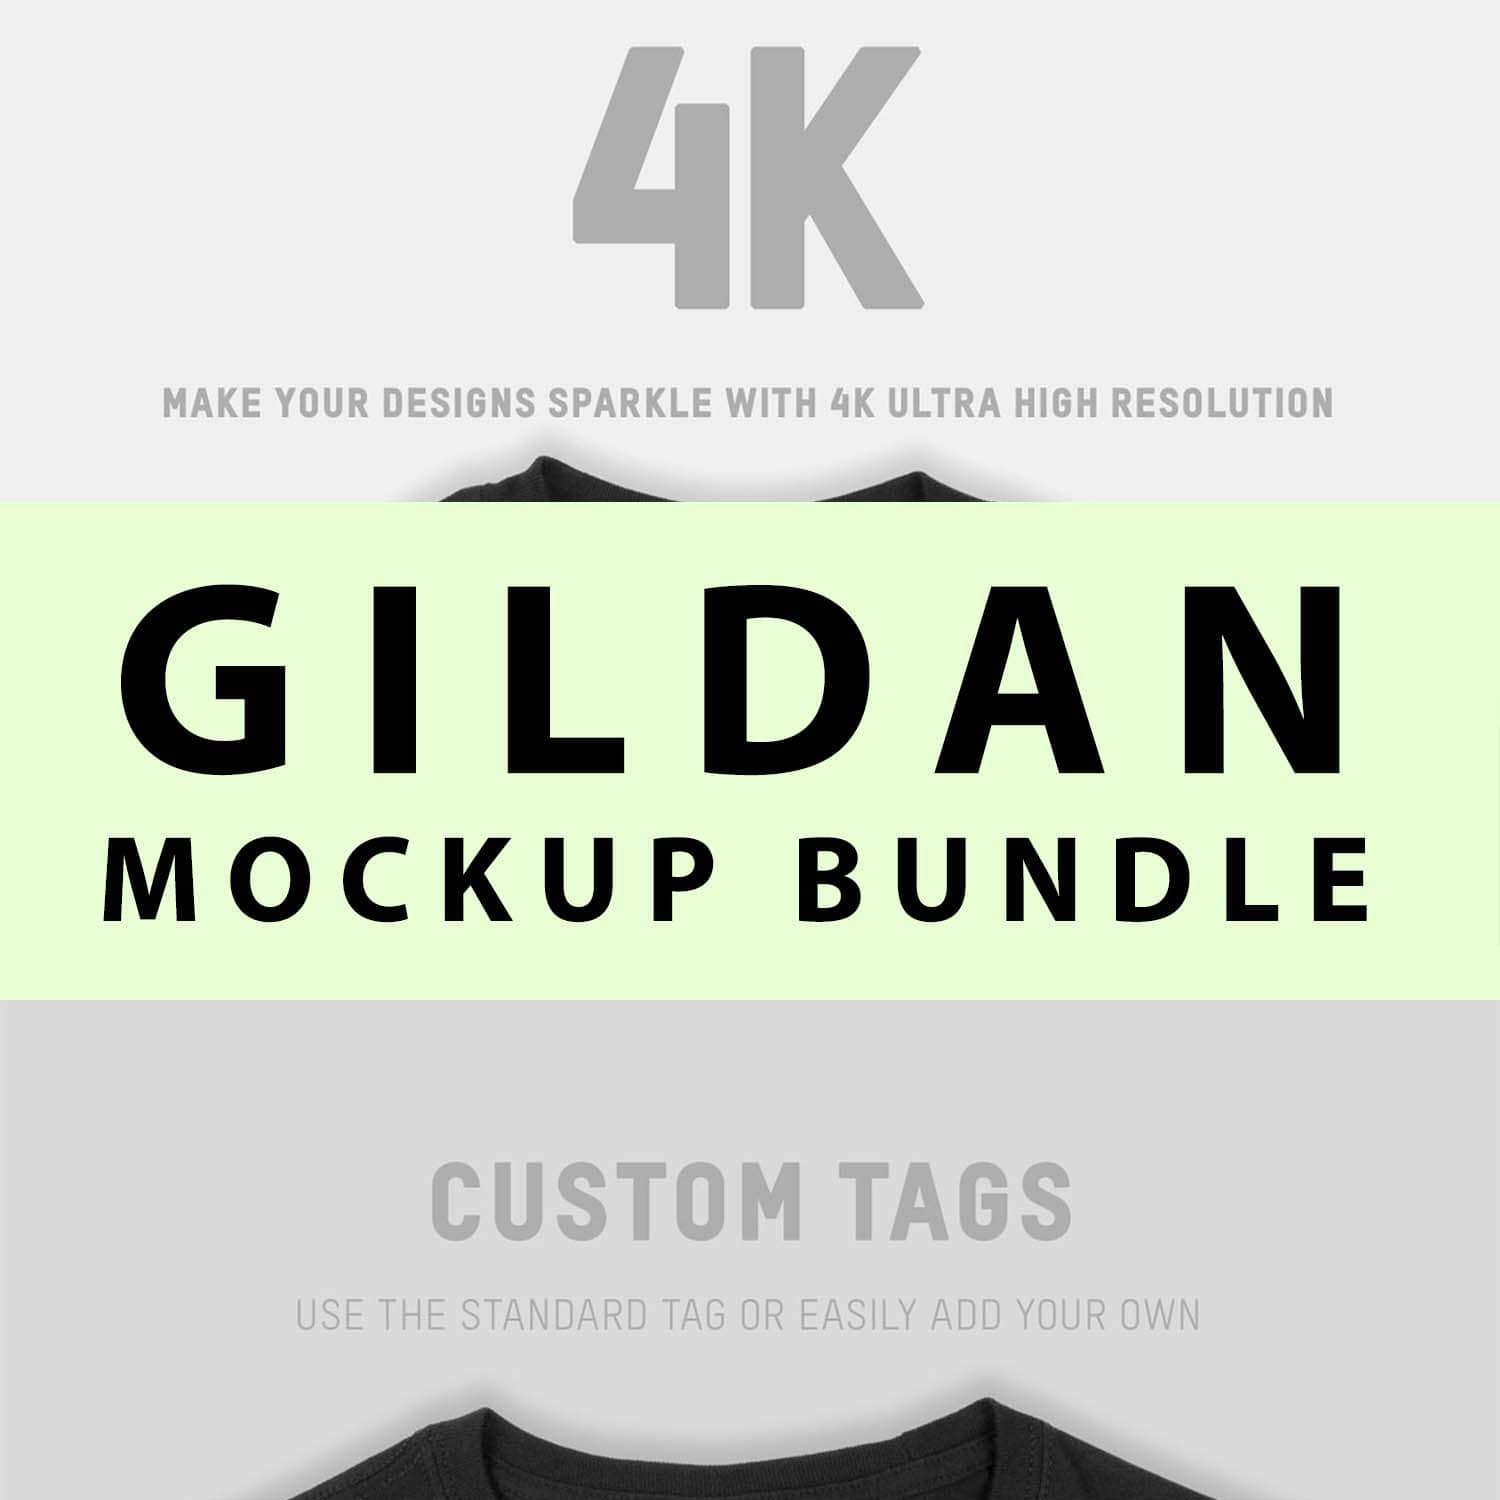 Gildan Mockup Bundle cover image.